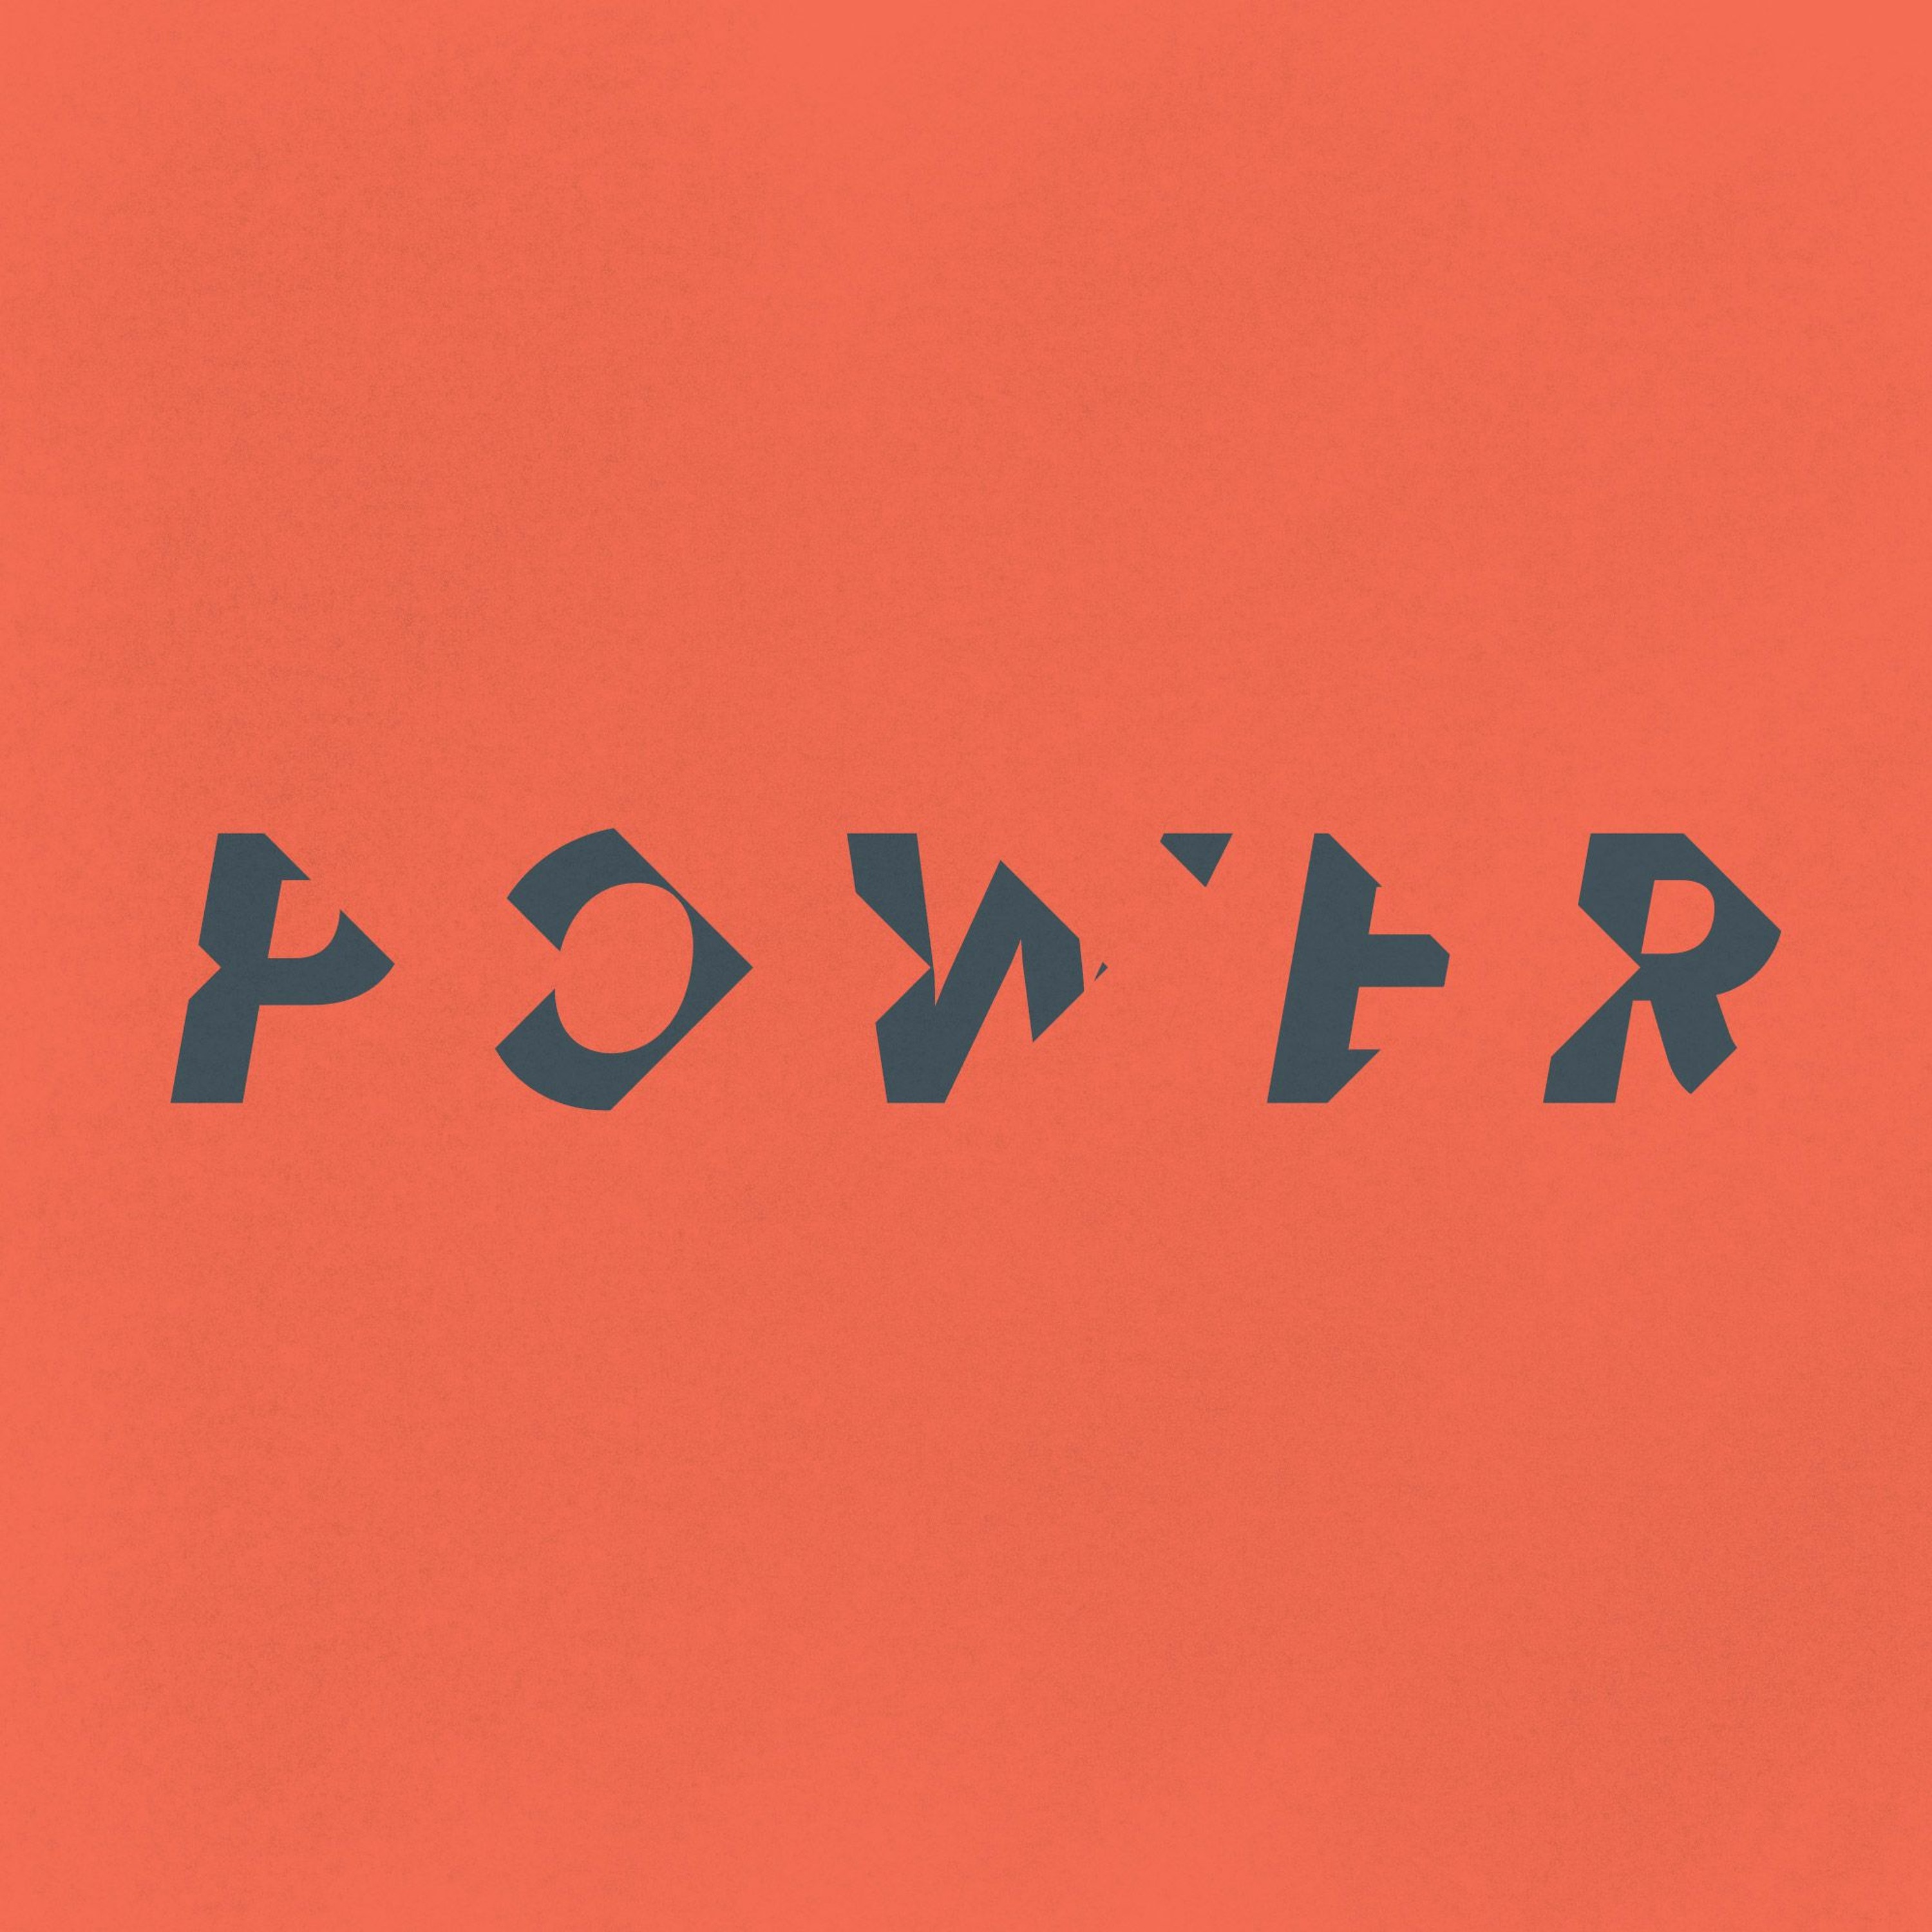 ’Influence of Power’ / David McBride